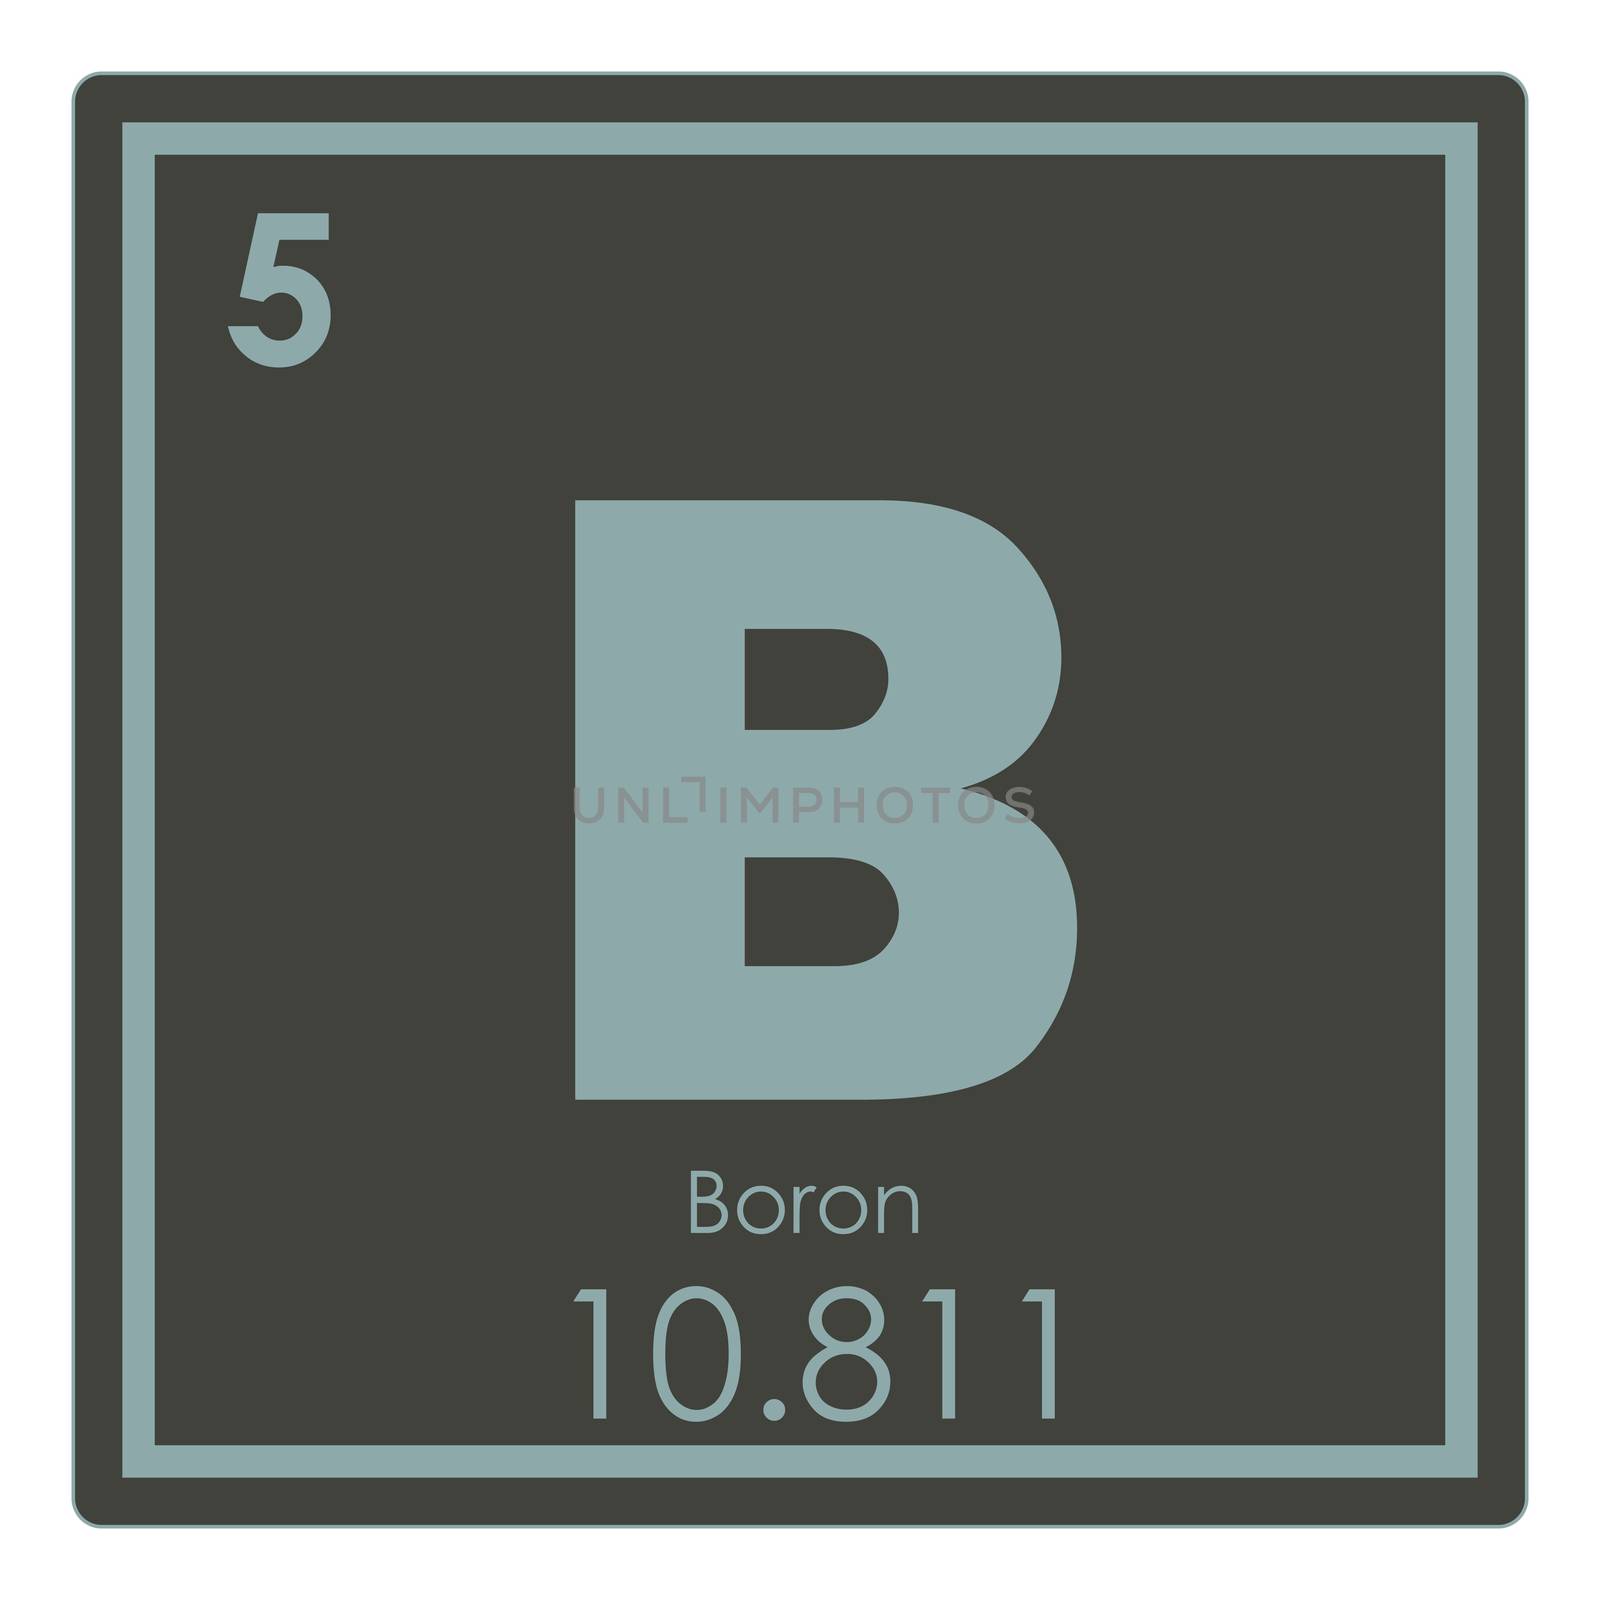 Boron chemical element by tony4urban